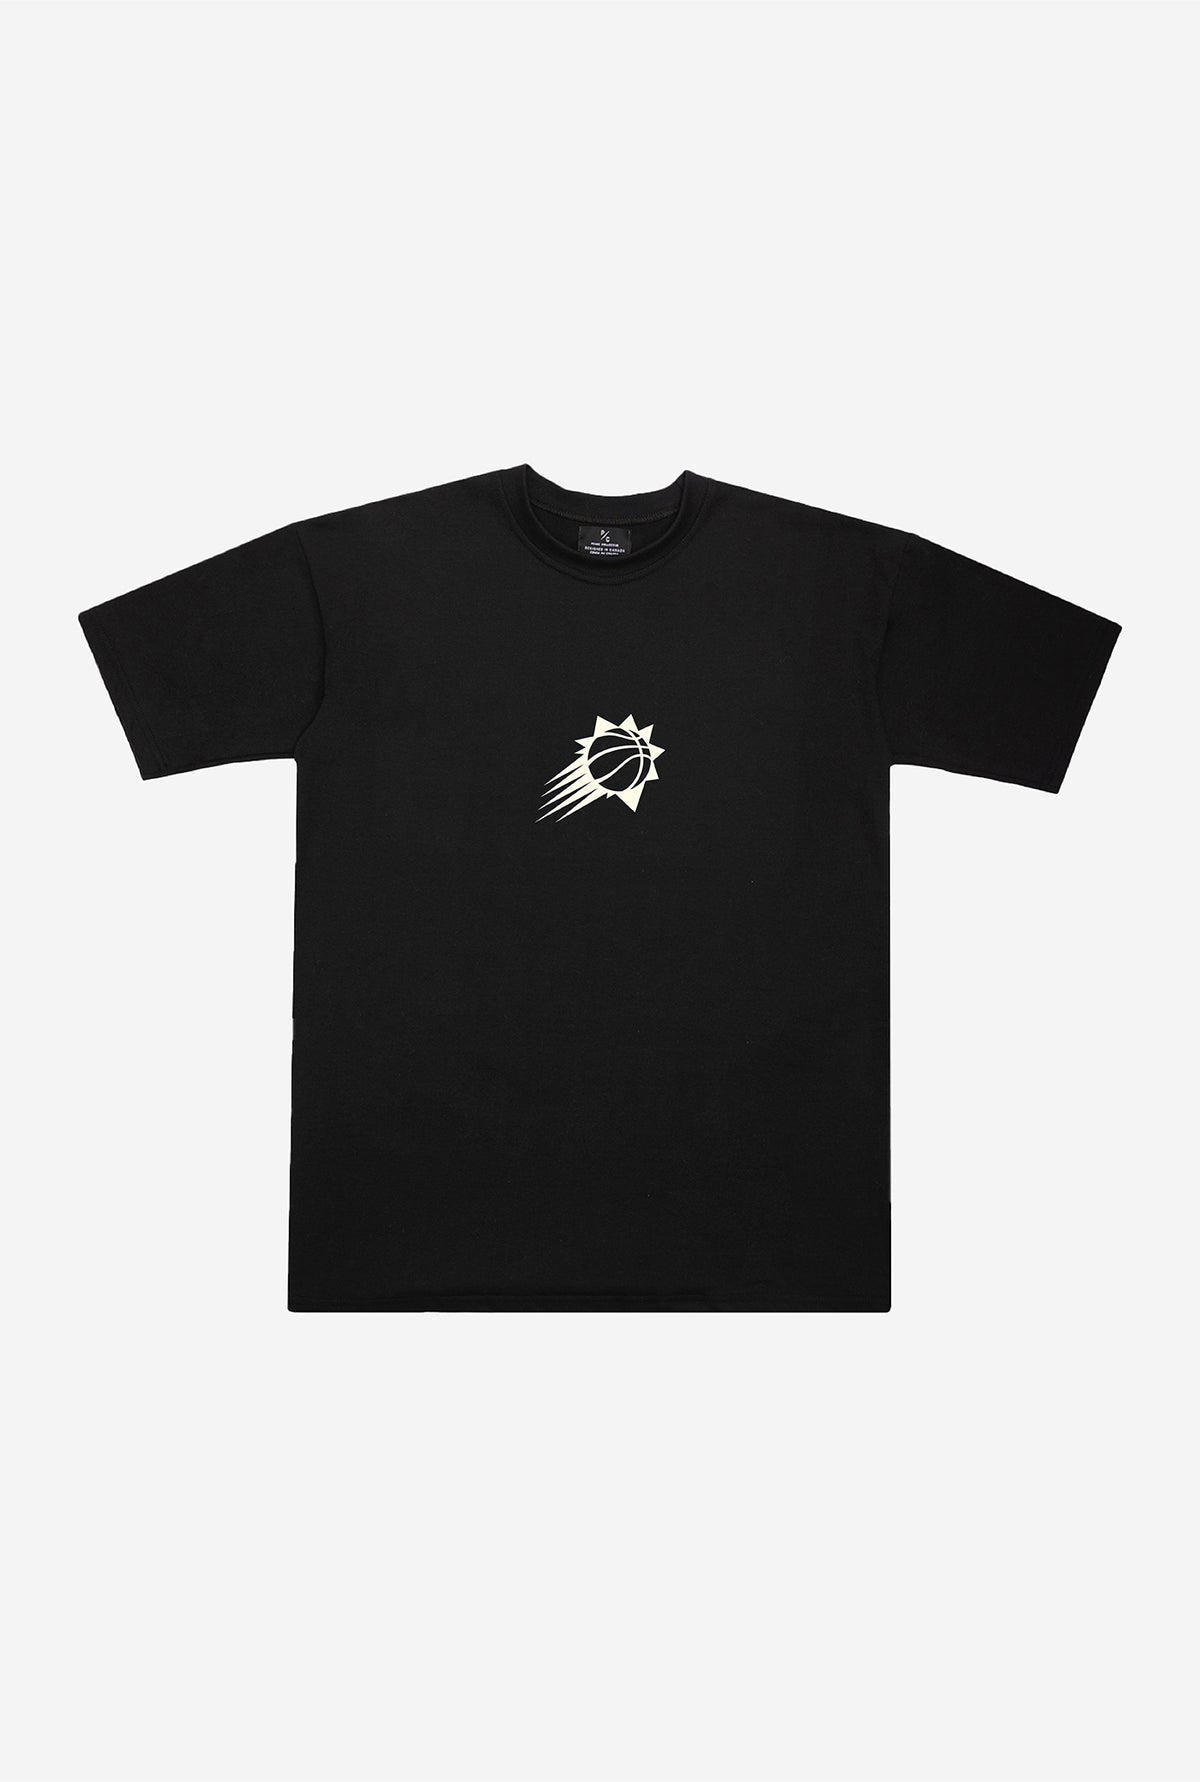 Phoenix Suns Premium Heavyweight T-Shirt - Black